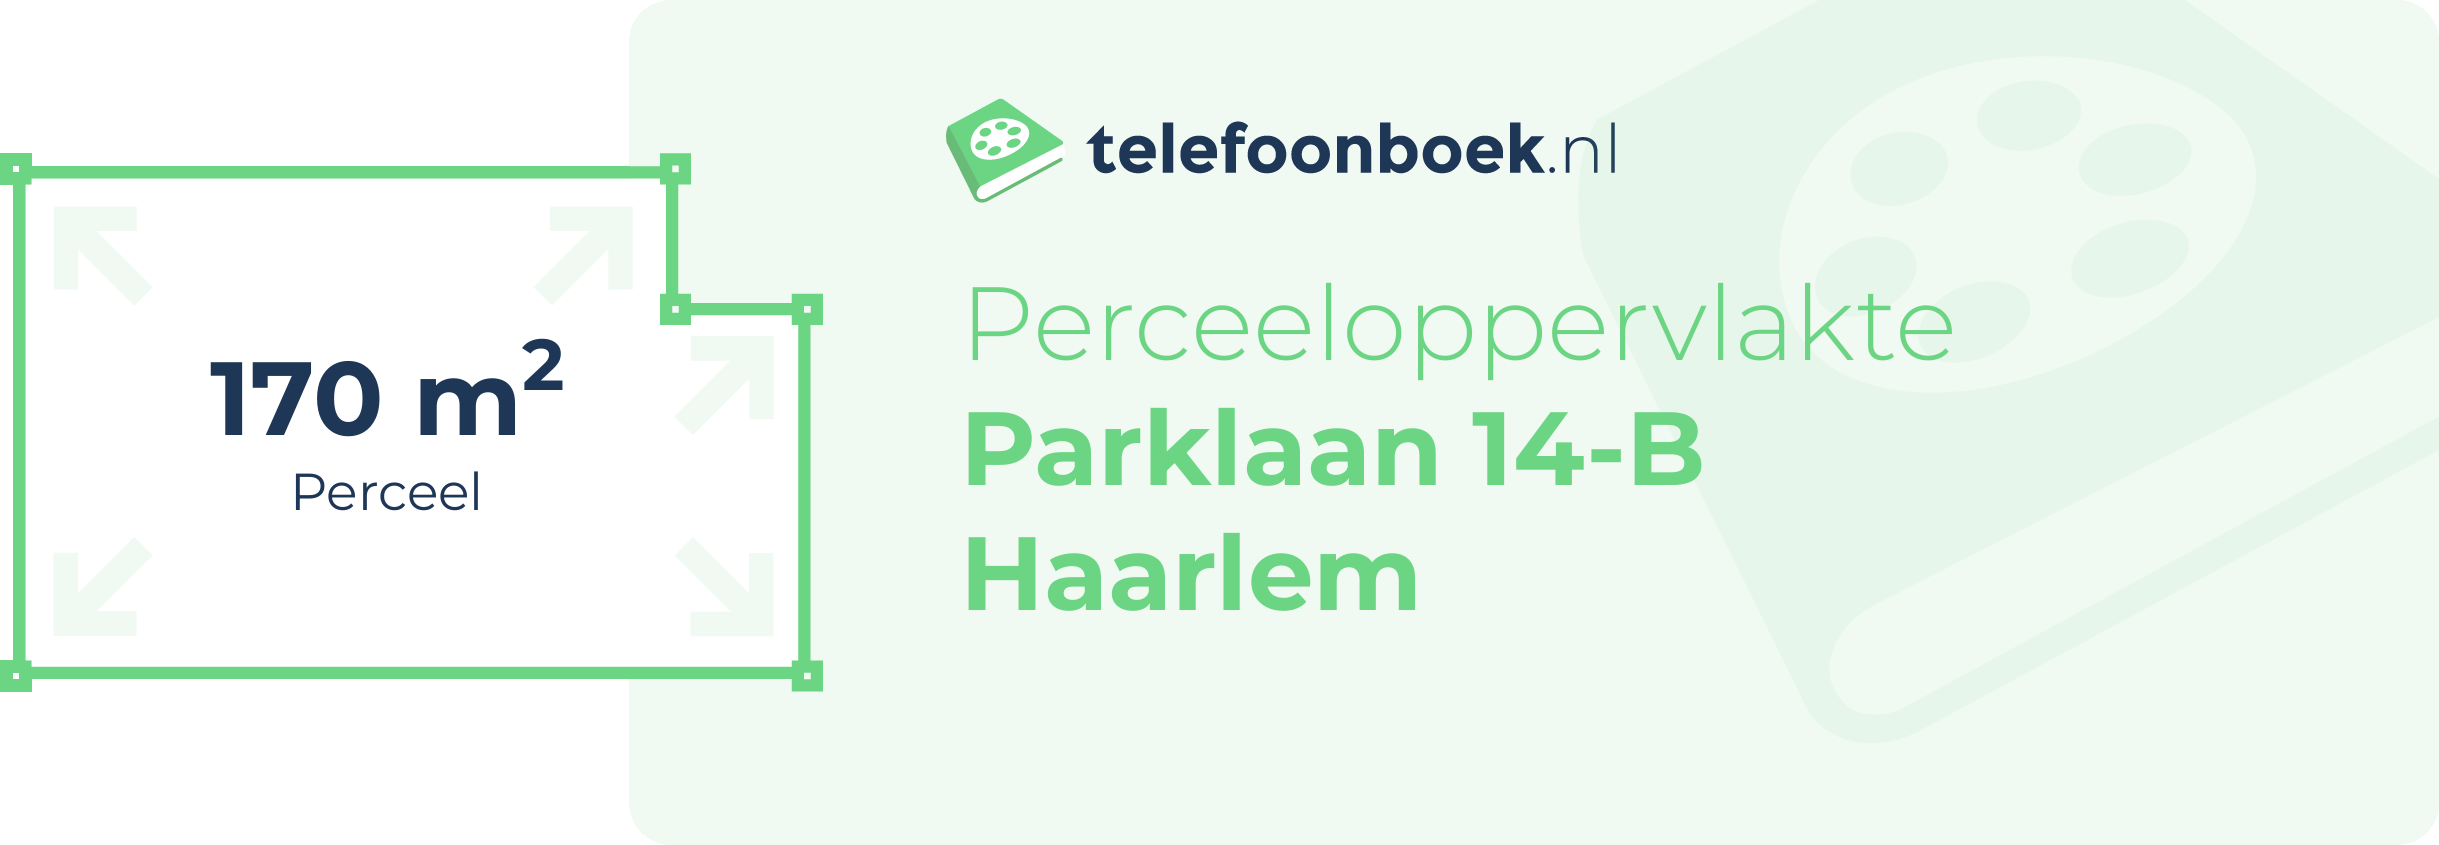 Perceeloppervlakte Parklaan 14-B Haarlem